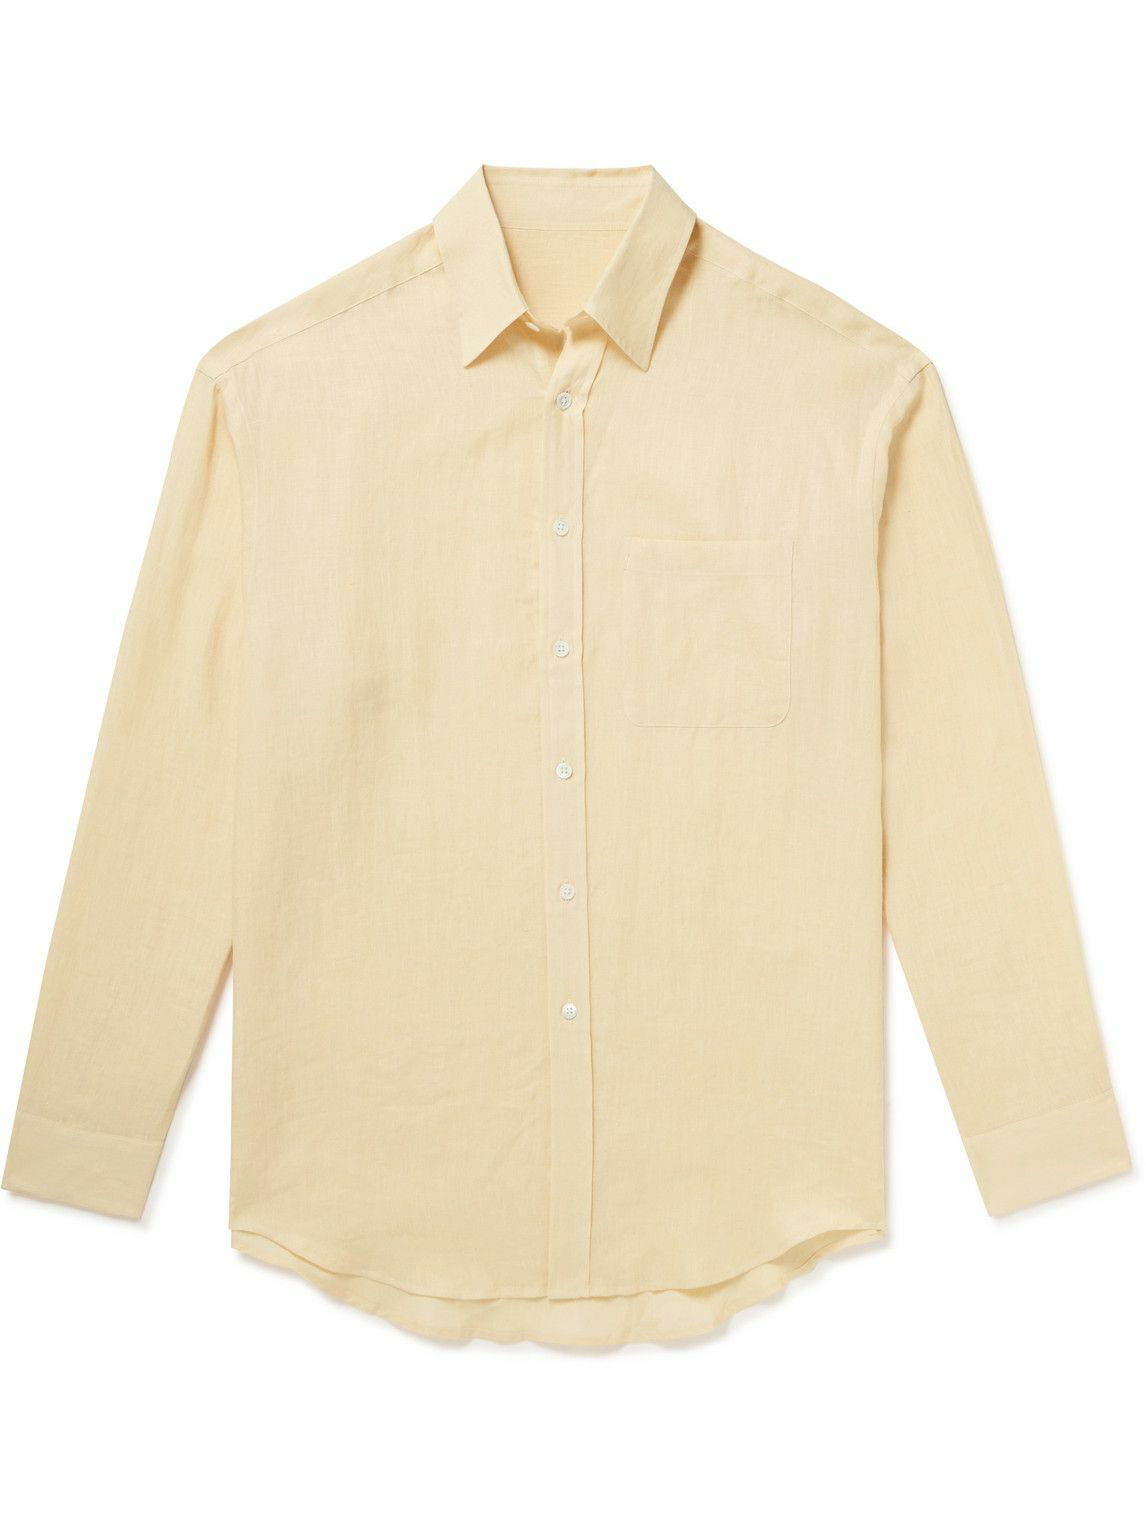 Anderson & Sheppard - Linen Shirt - Yellow Anderson & Sheppard